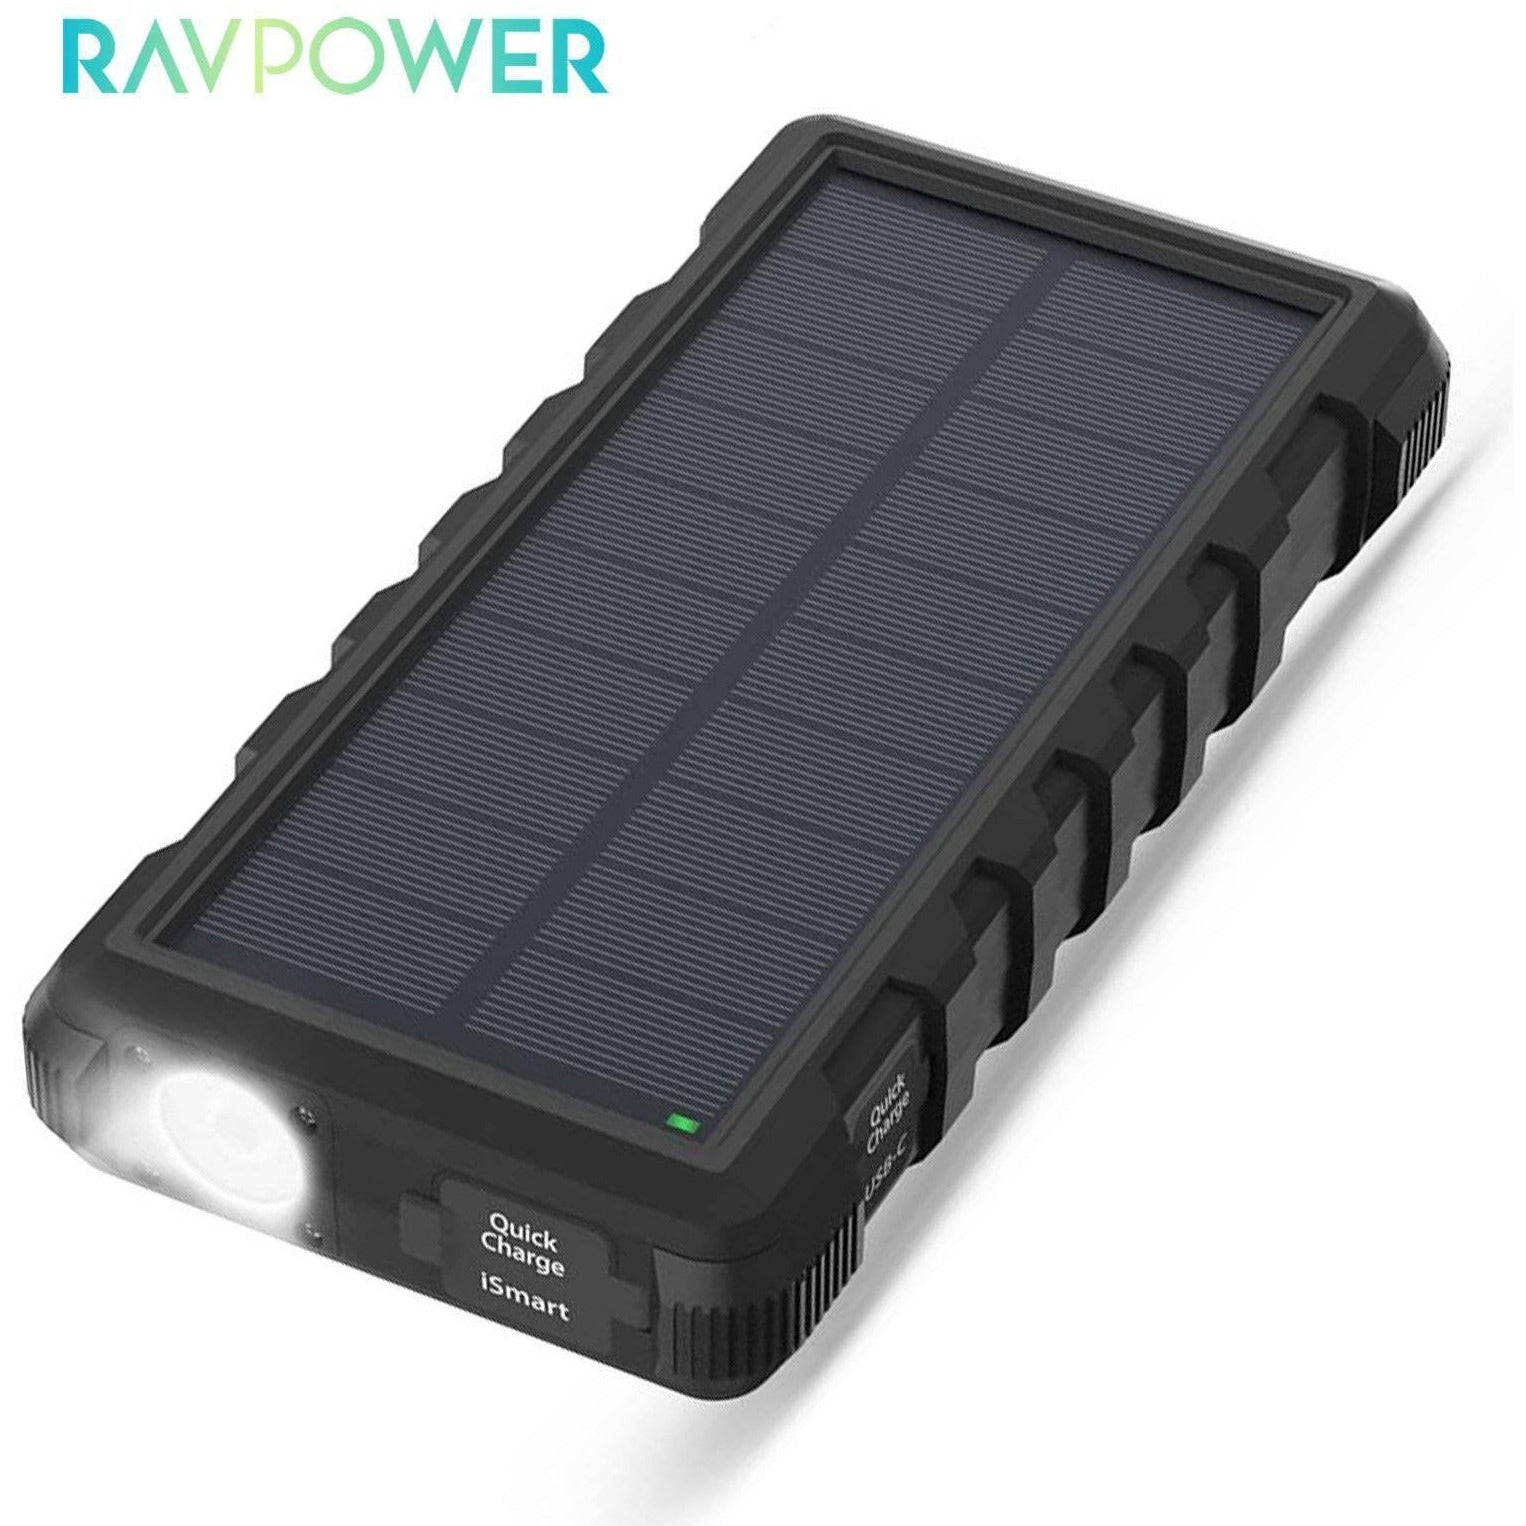 RAVPower Solar Charger 25000mAh Power Bank | Shopna Online Store .